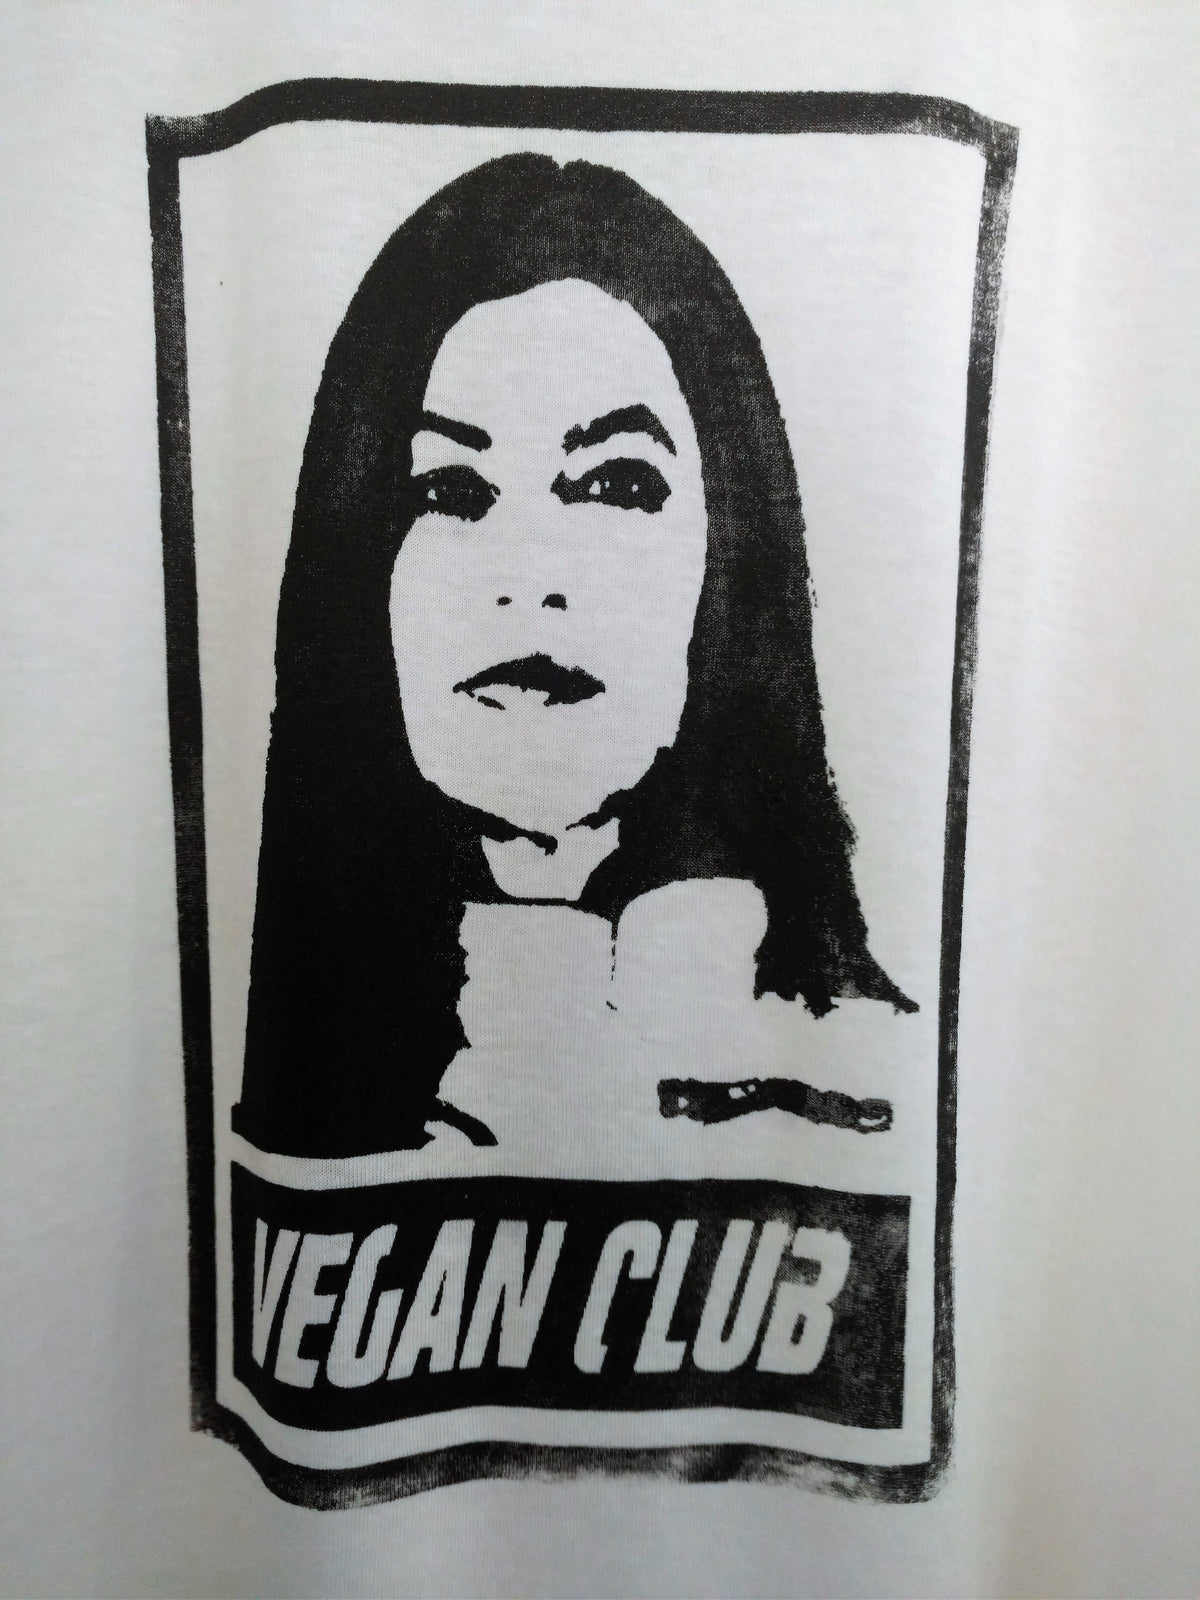 Vegan Club T-shirt Warrior Leilani Münter